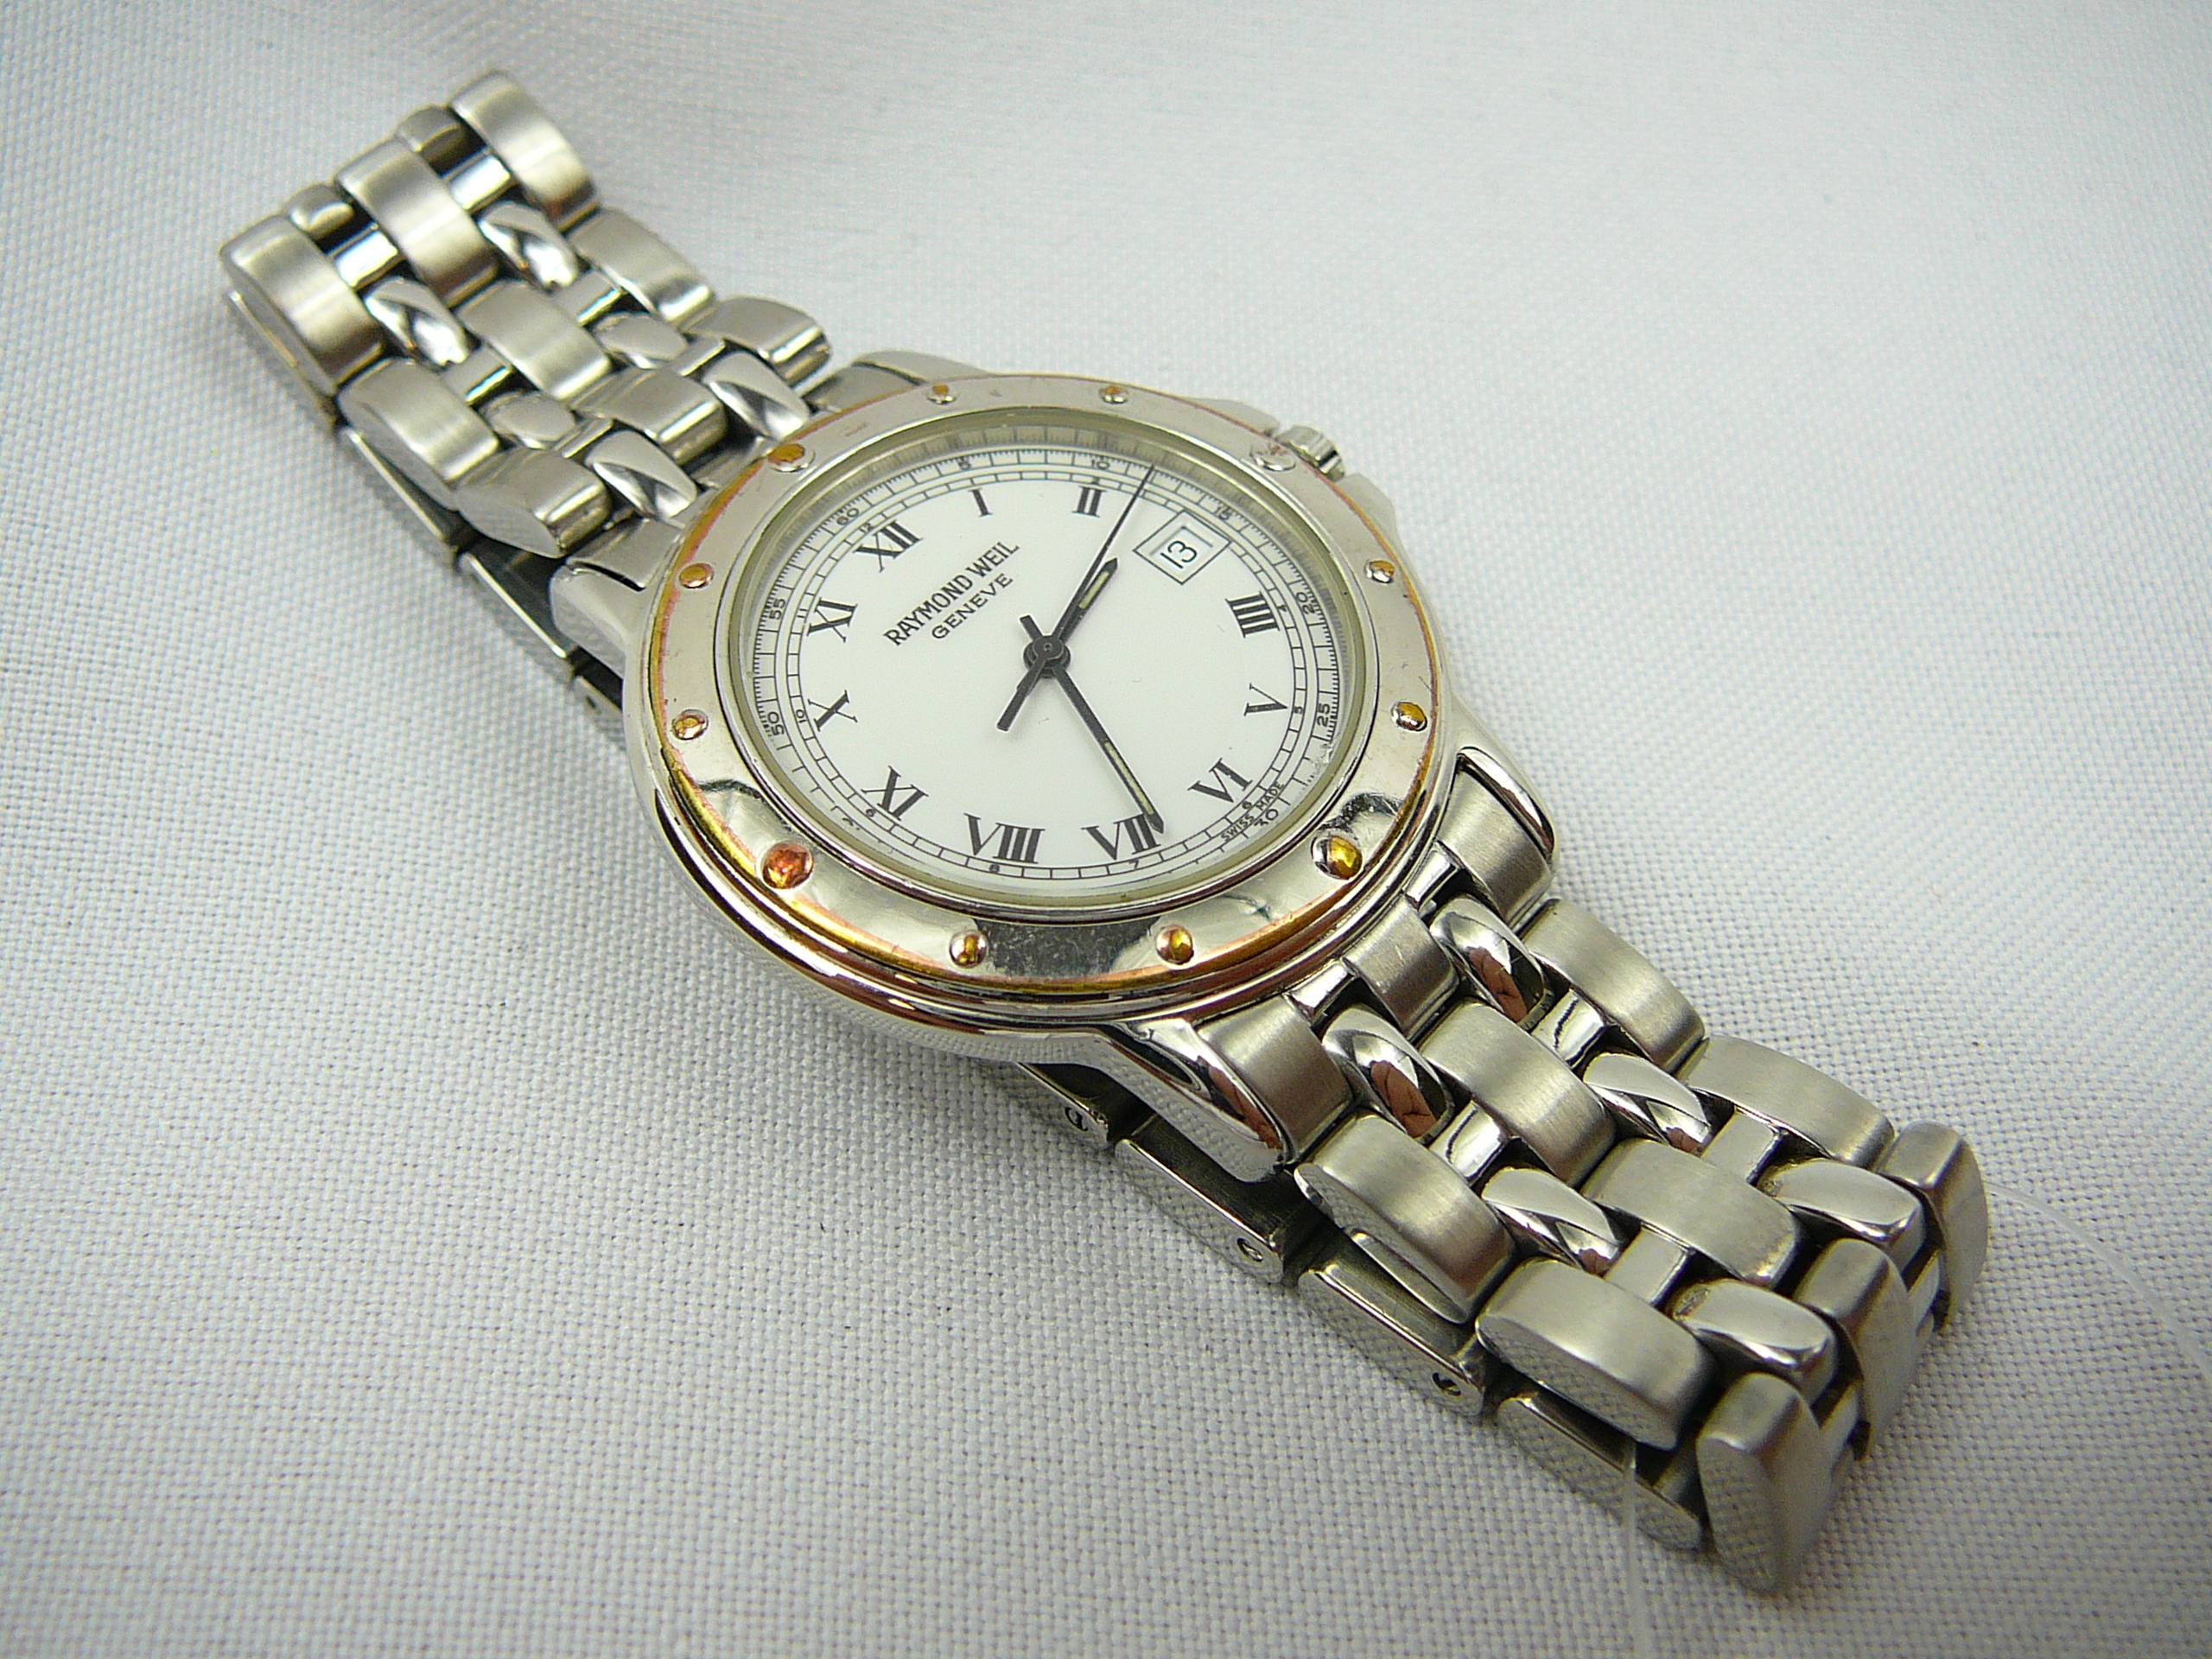 Gents Raymond Weil wrist watch, - Image 2 of 3